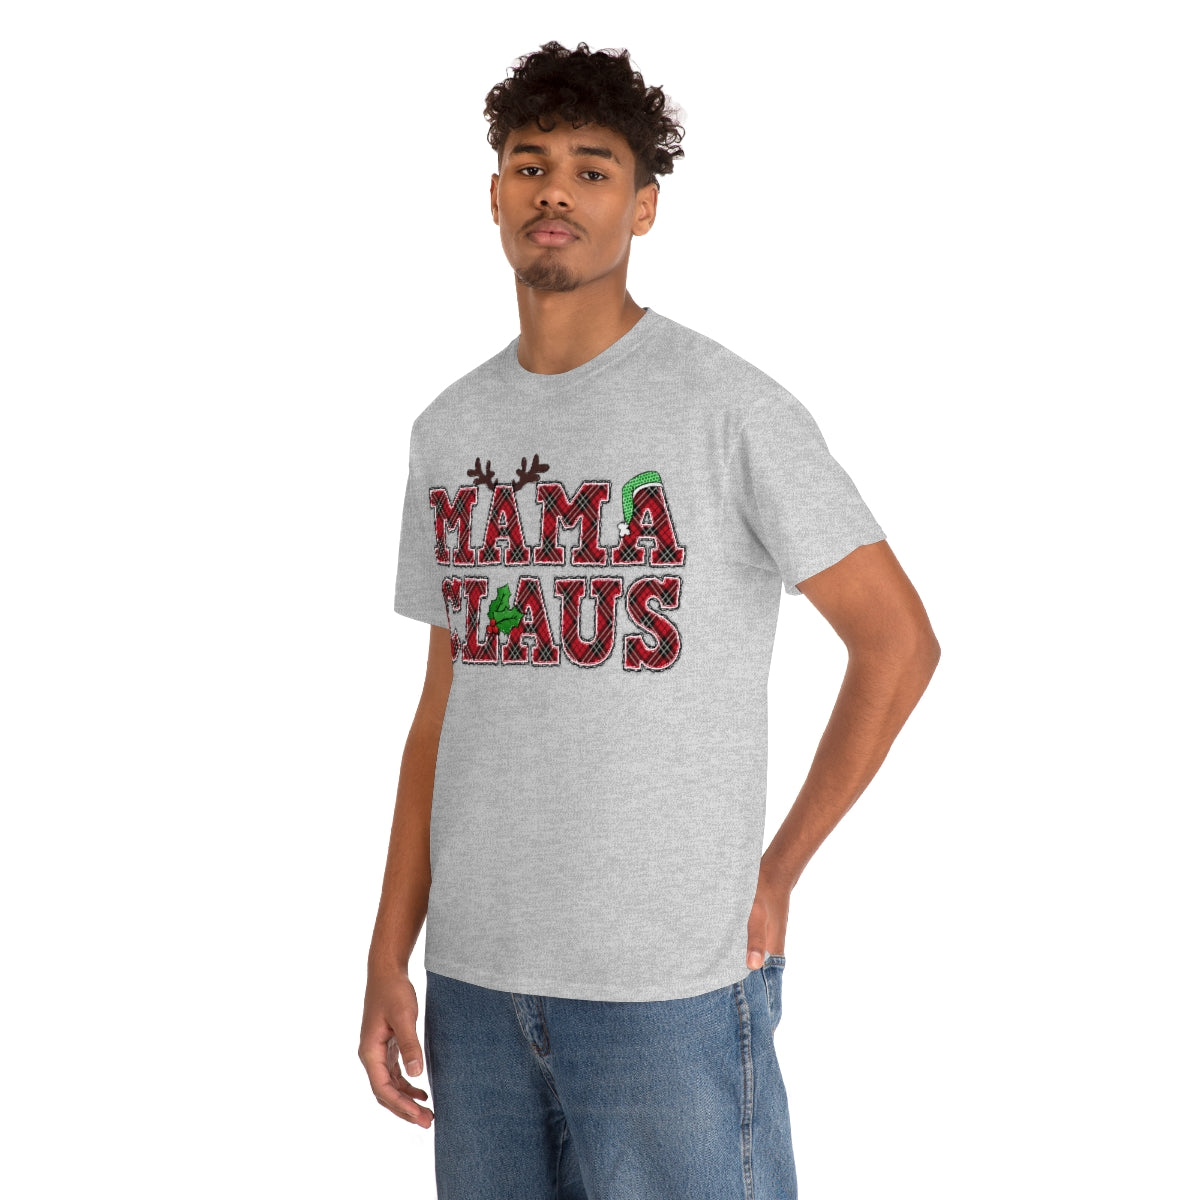 Mama Claus Christmas T-shirt